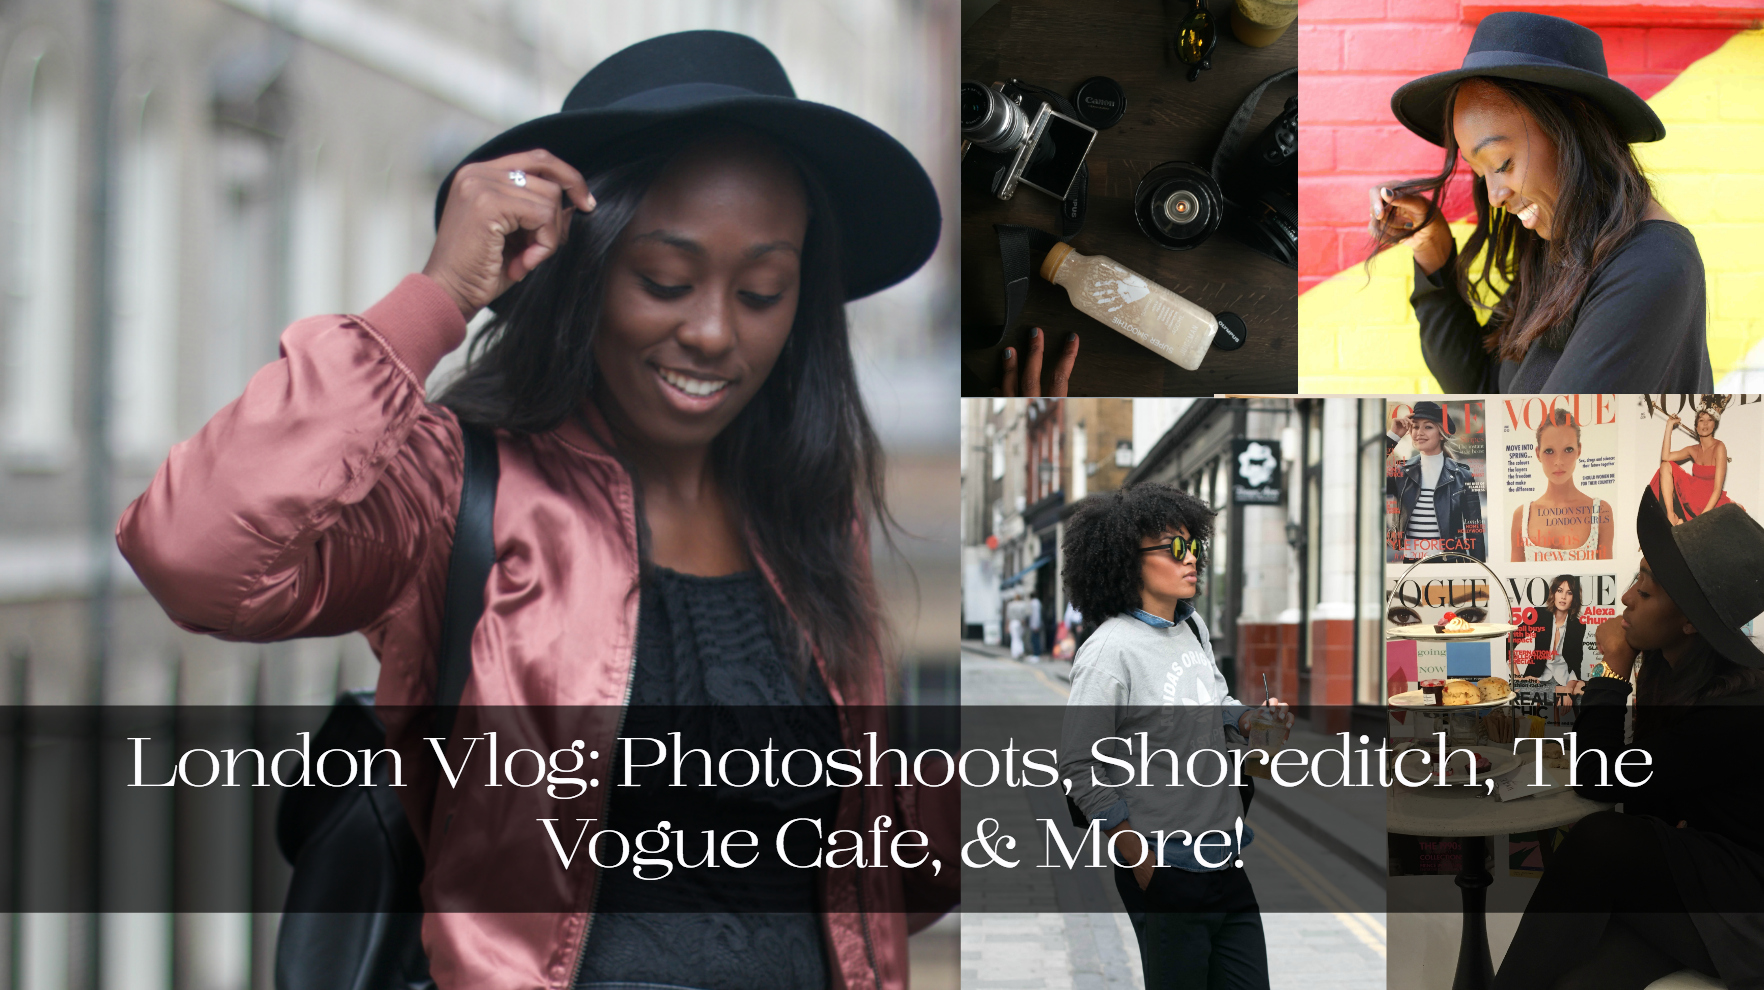 London Vlog: Photoshoots, Shoreditch, The Vogue Cafe, & More!